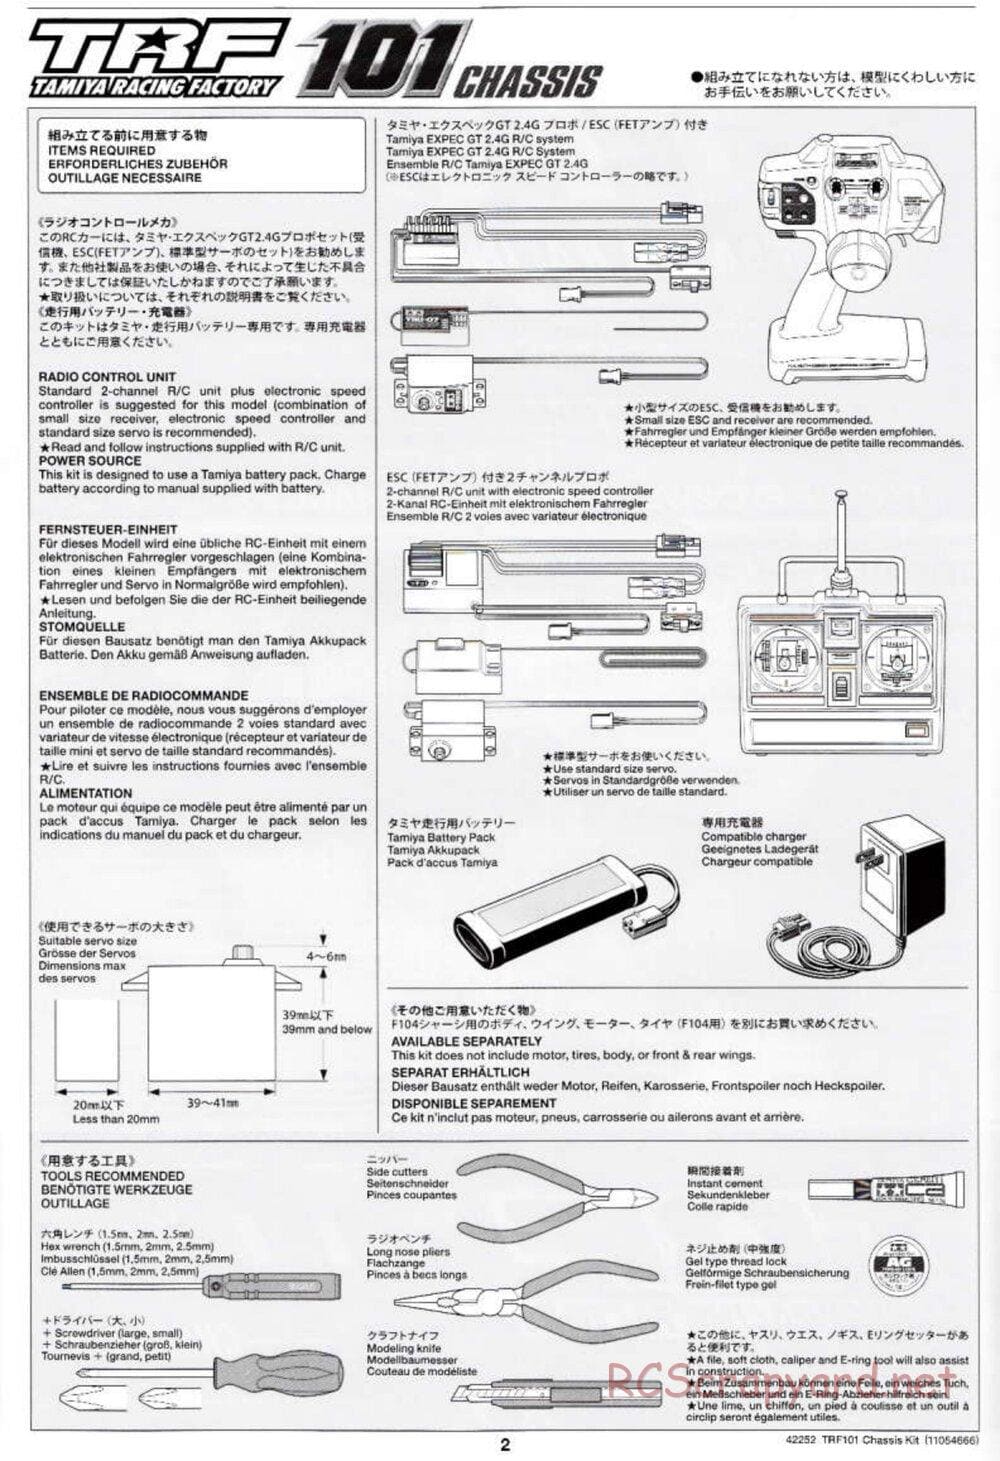 Tamiya - TRF101 Chassis - Manual - Page 2